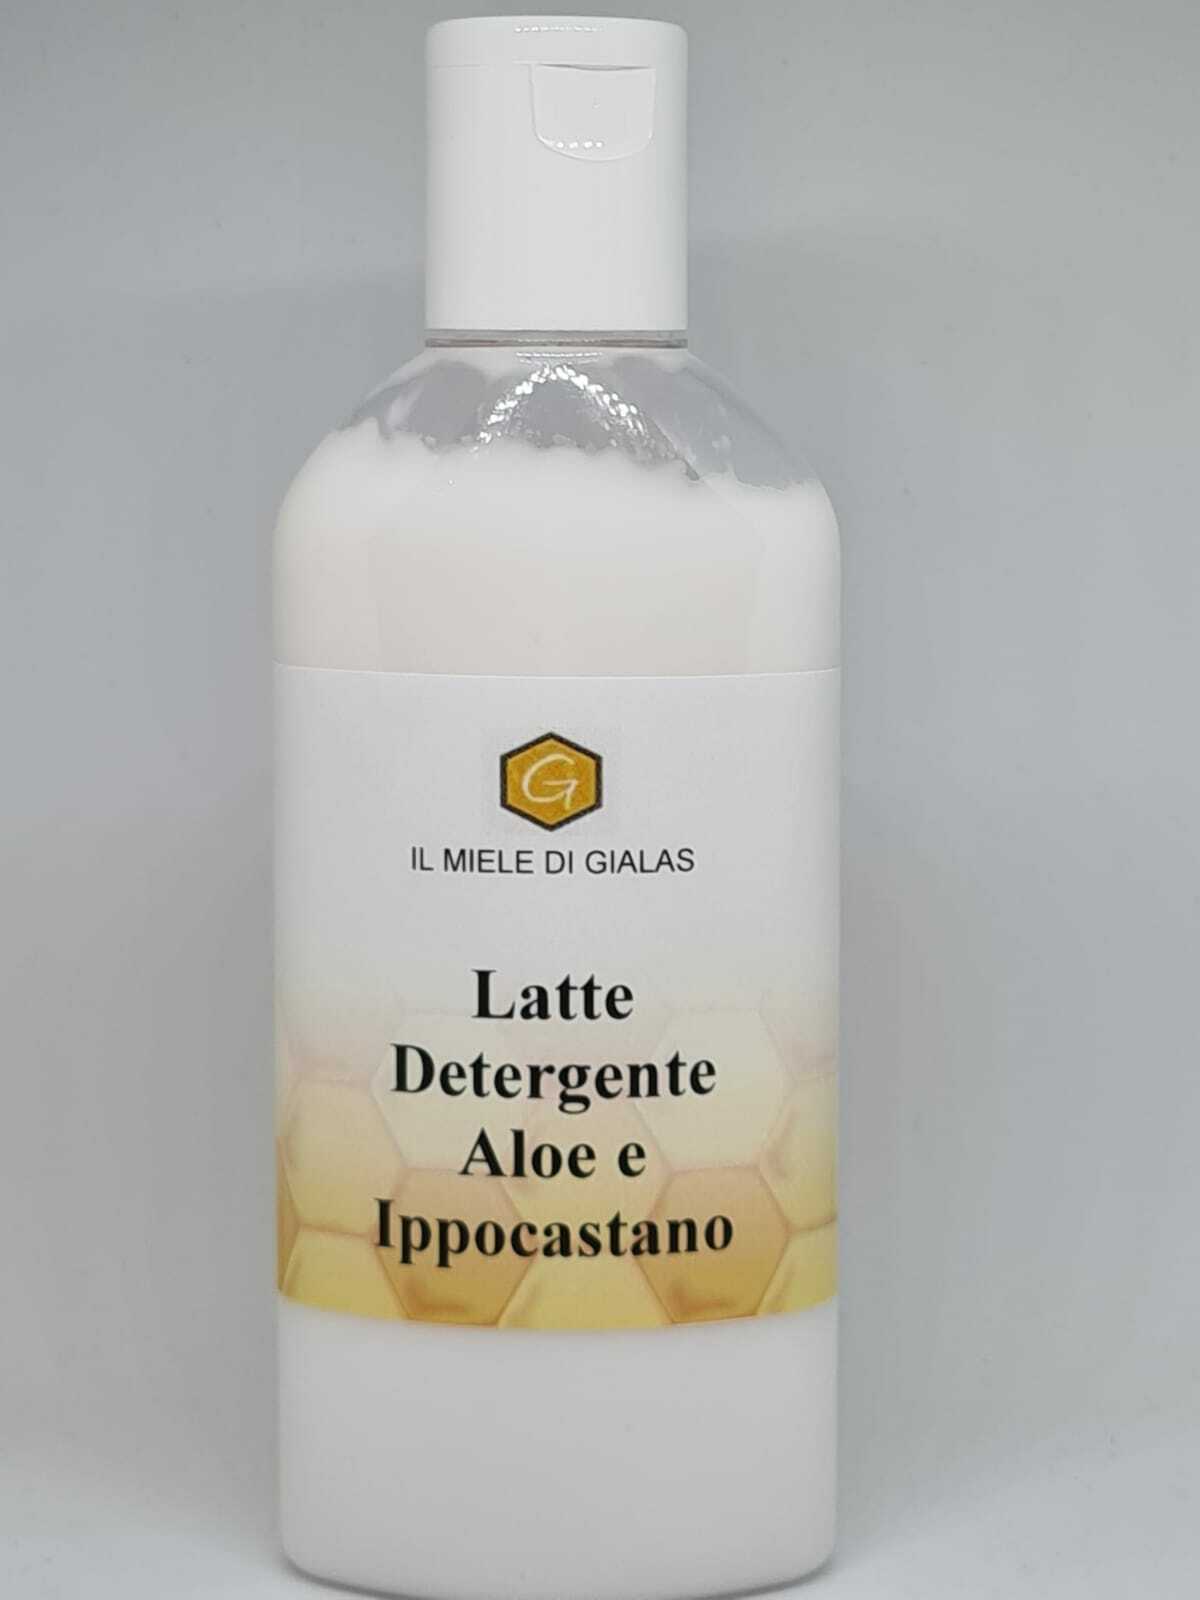 Latte detergente all'Aloe e Ippocastano 00126